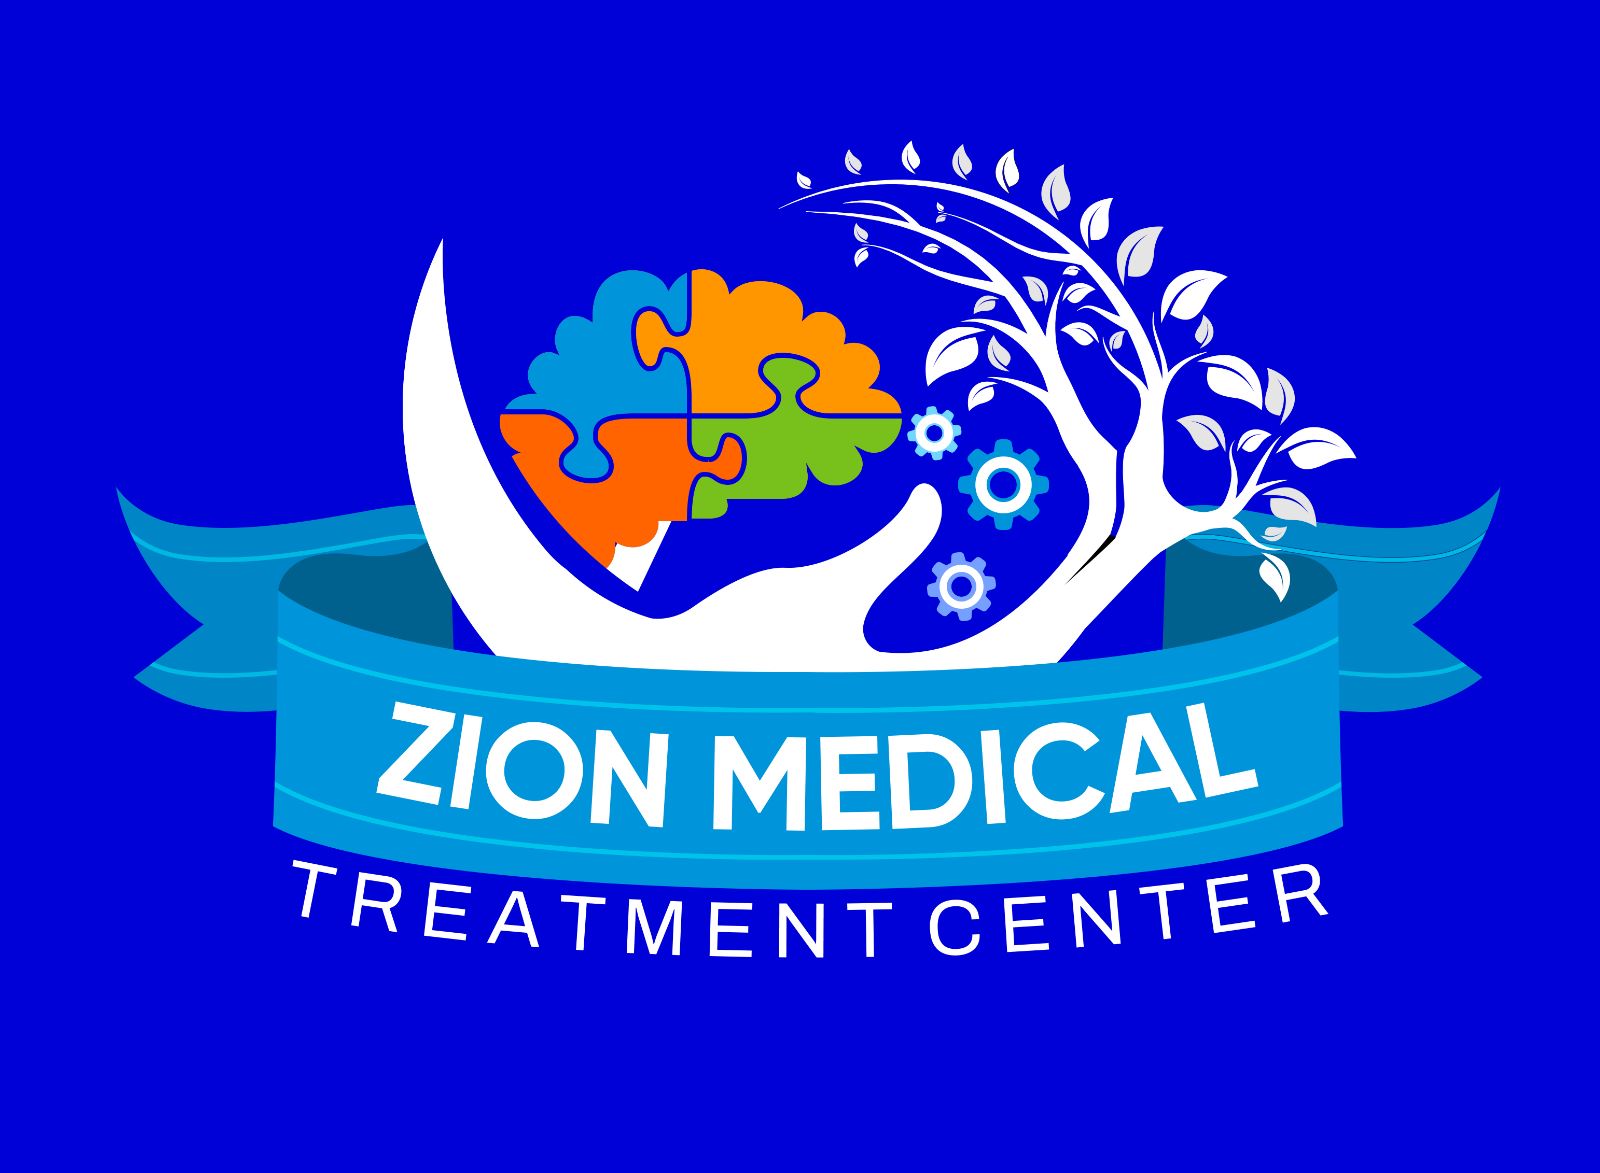 Zion Medical Treatment Center logo